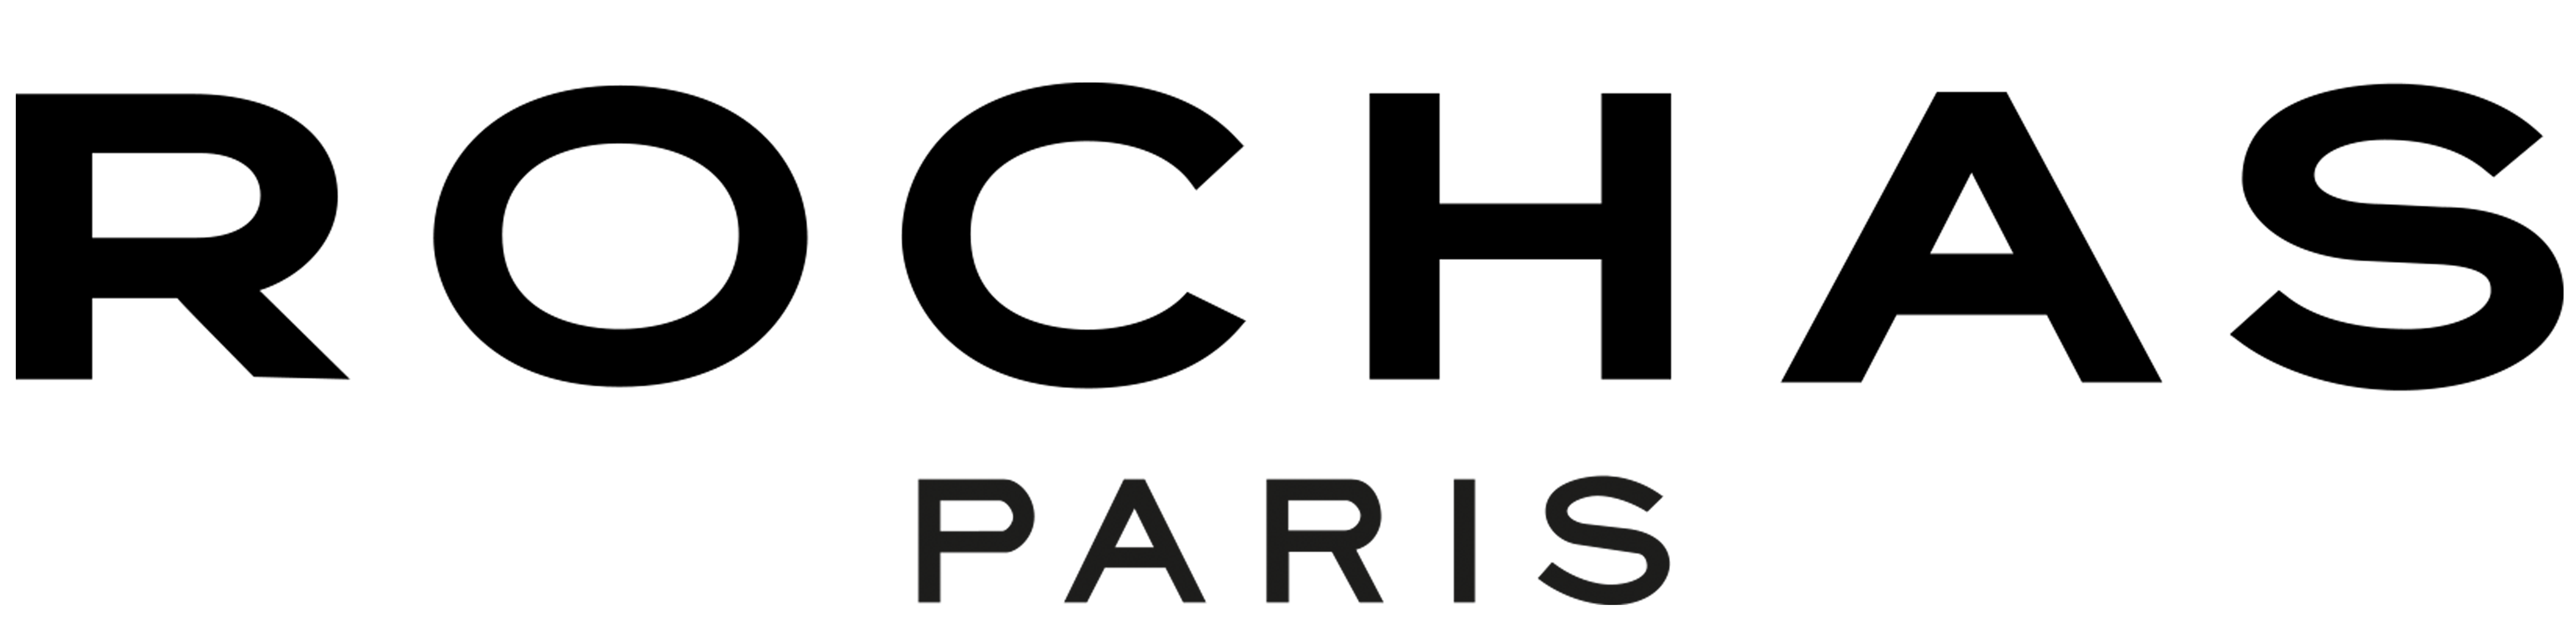 Rochas Logo